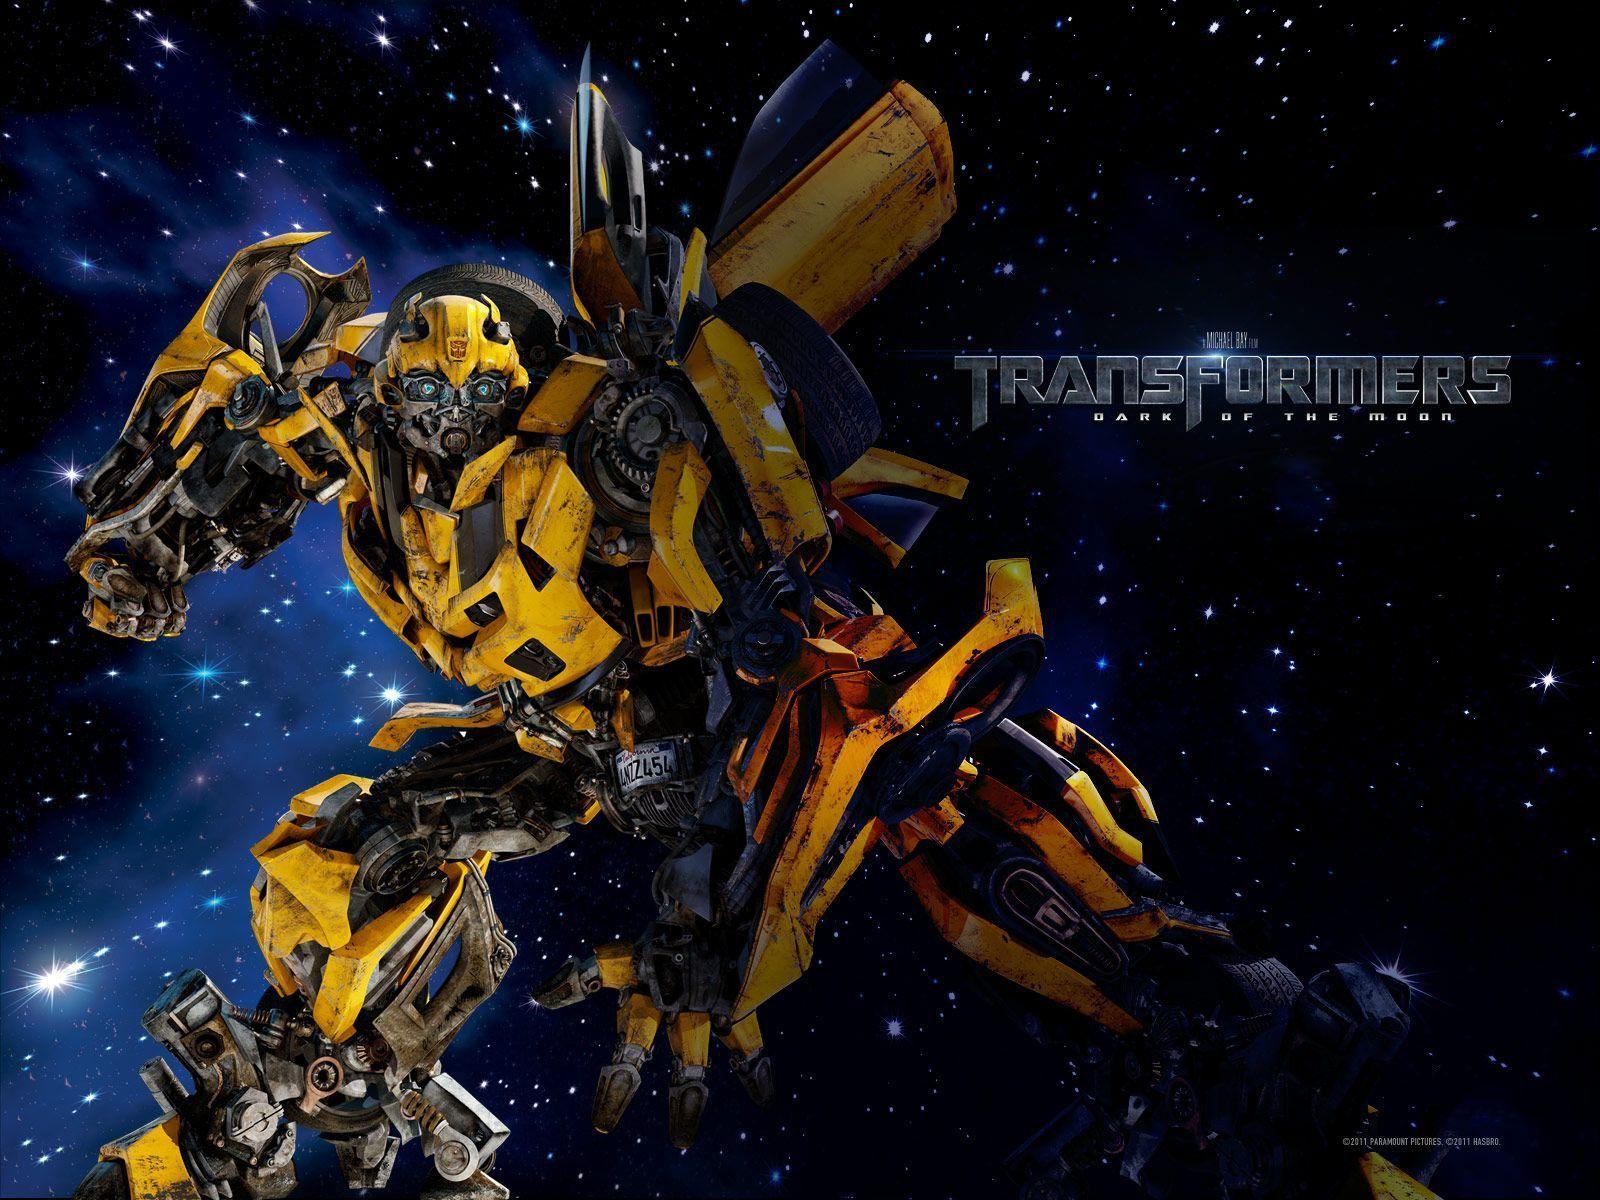 Bumblebee Transformer Wallpaper for Desktop